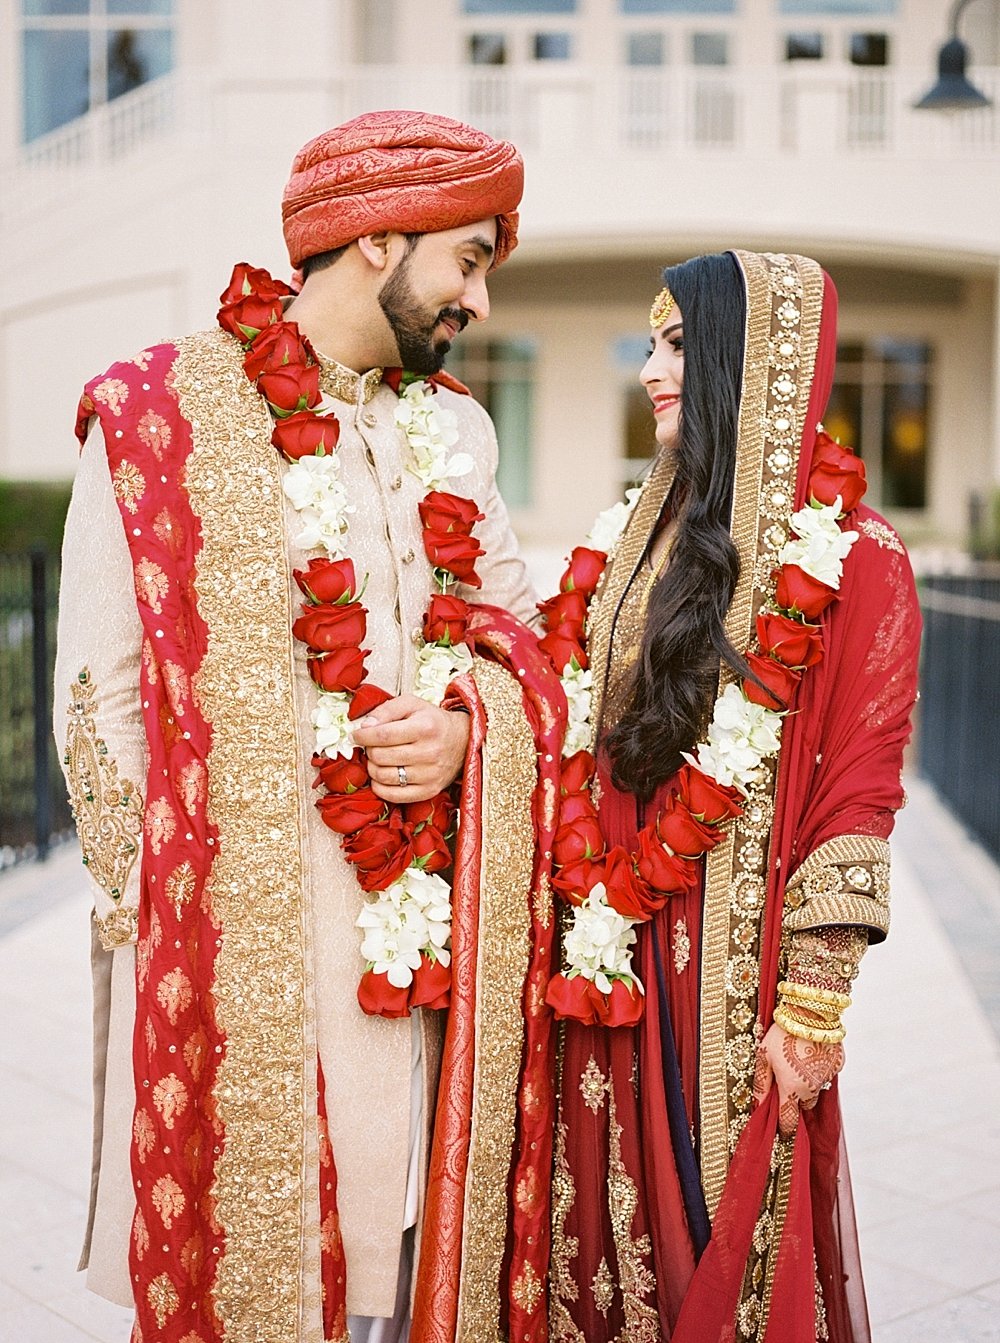 Indian Wedding Hilton Bonnet Creek Waldorf Astoria Orlando FL - Mamiya 645 afd - Film Photography | Ashley Holstein Photography #portra400 #indianbride #indiangroom #indianwedding